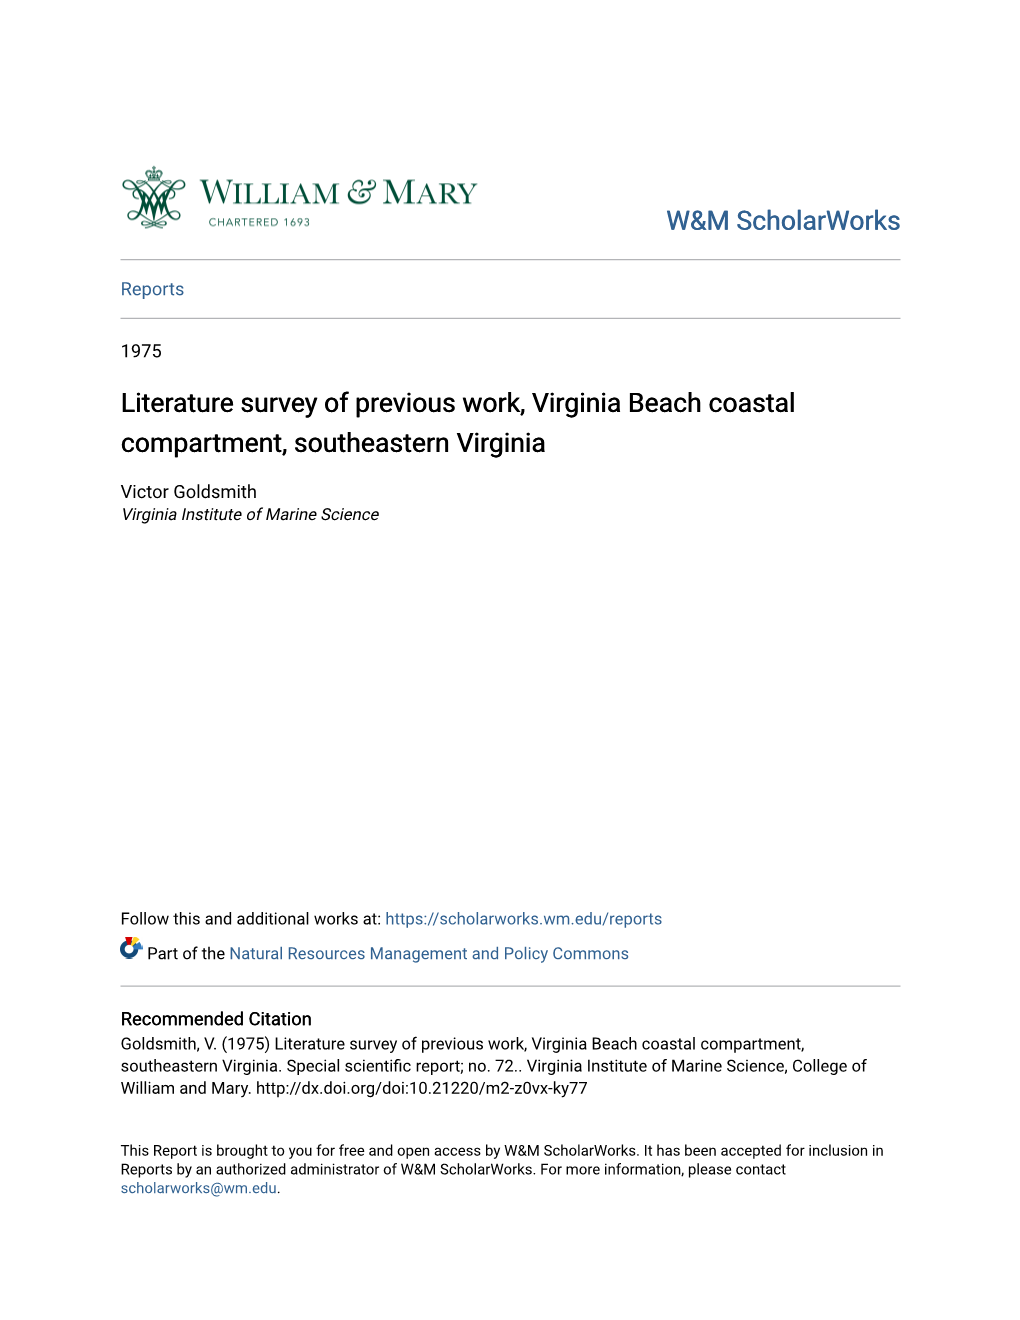 Literature Survey of Previous Work, Virginia Beach Coastal Compartment, Southeastern Virginia